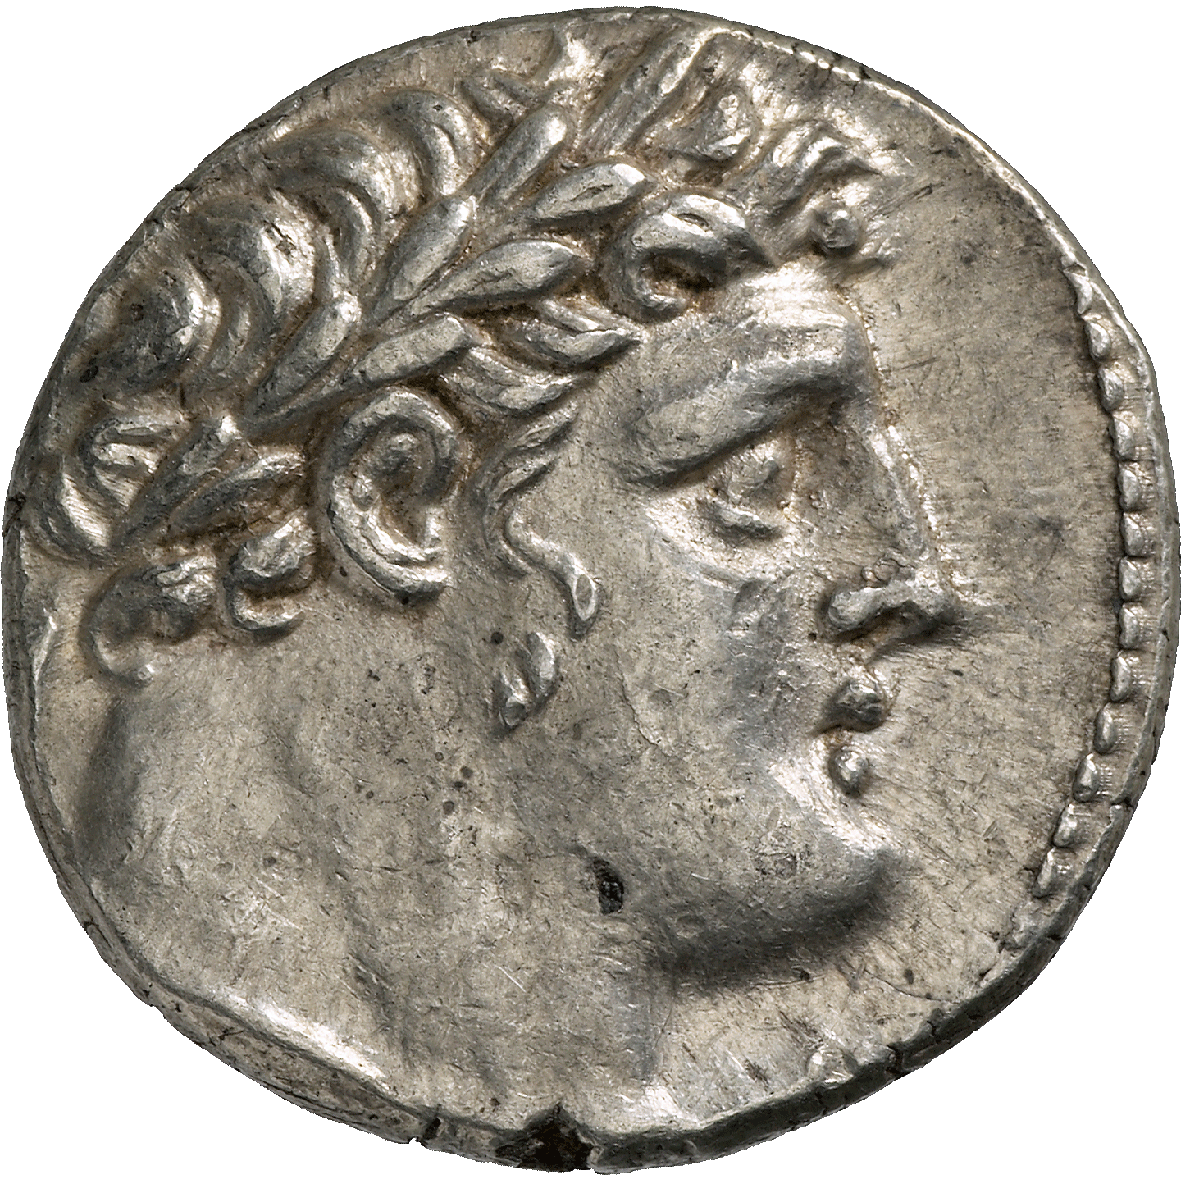 Seleucid Empire, Palestine, Tyre, Tetradrachm (Shekel) Year 21 (obverse)